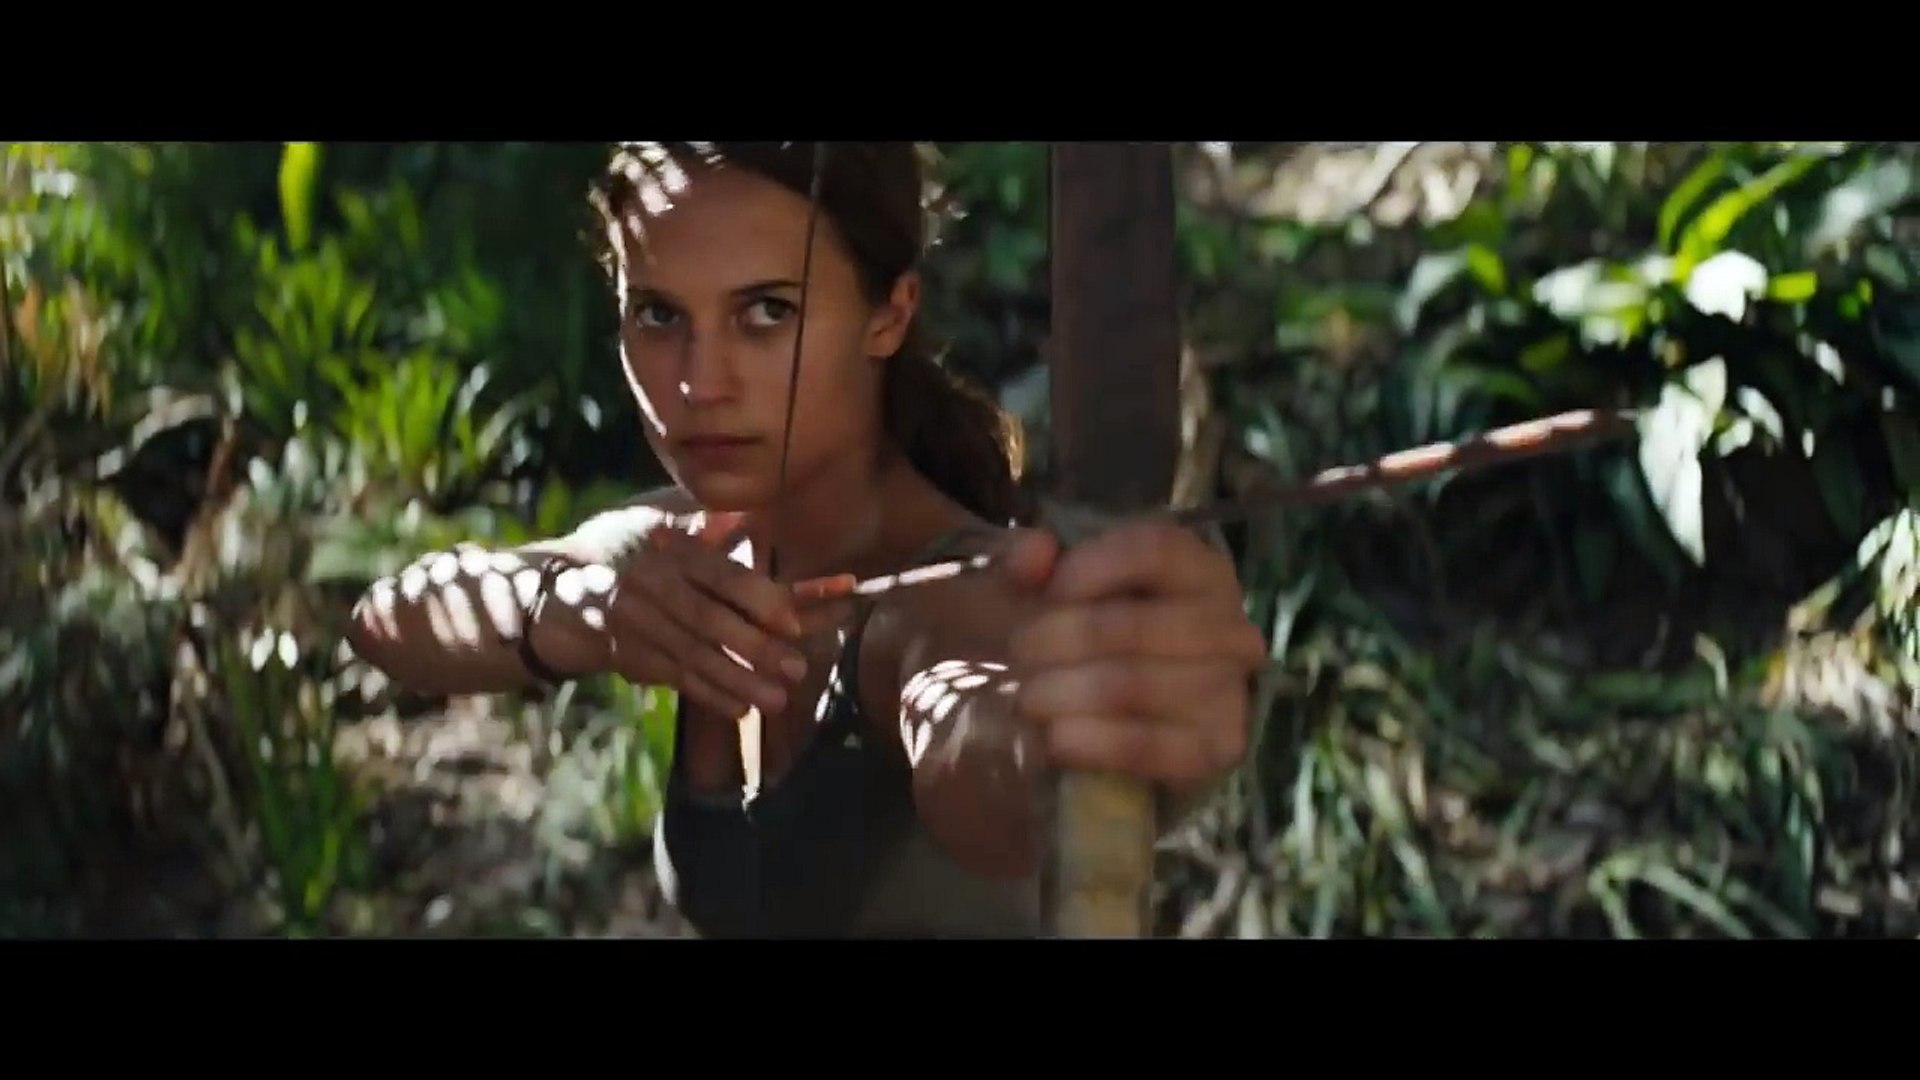 Tomb Raider: A Origem - Trailer Oficial 1 (leg) [HD] 